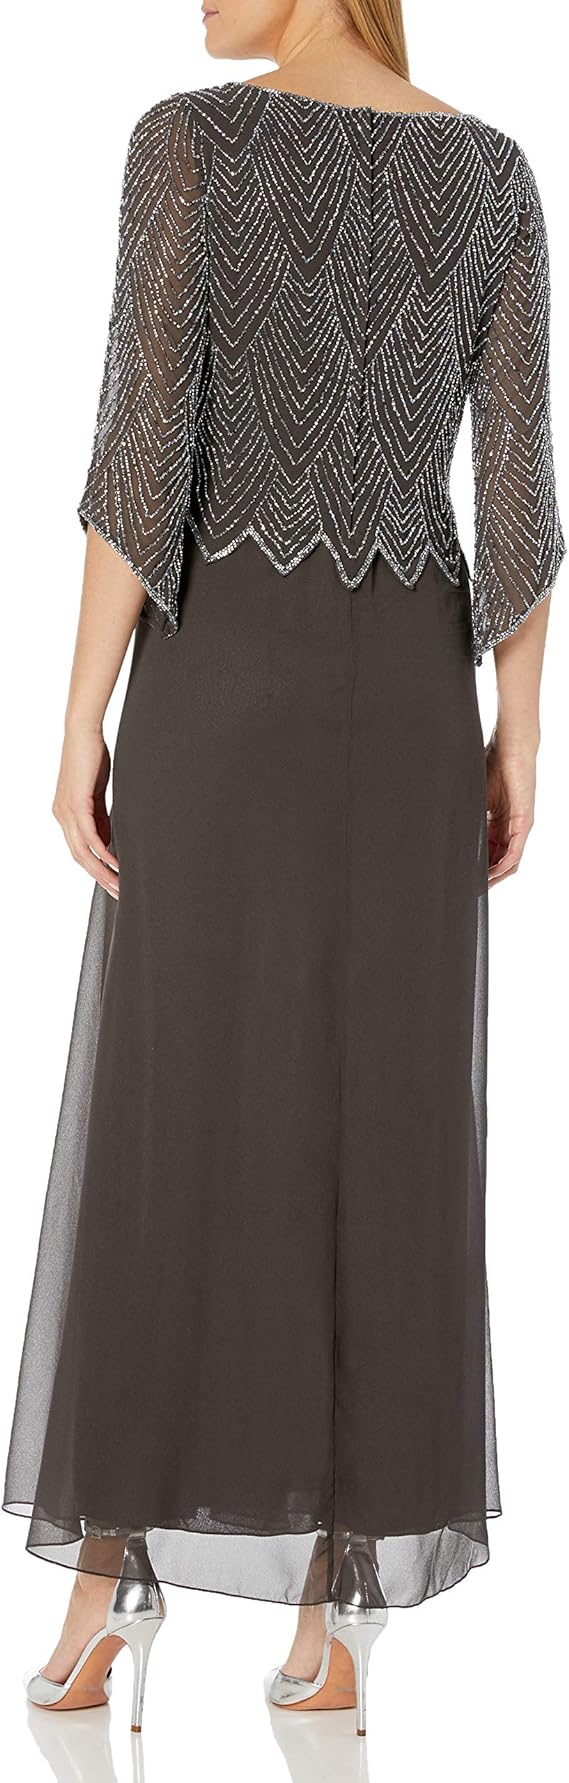 JKara Scoop Neck 3/4 Sleeves Long Dress - Grey (Size 16)